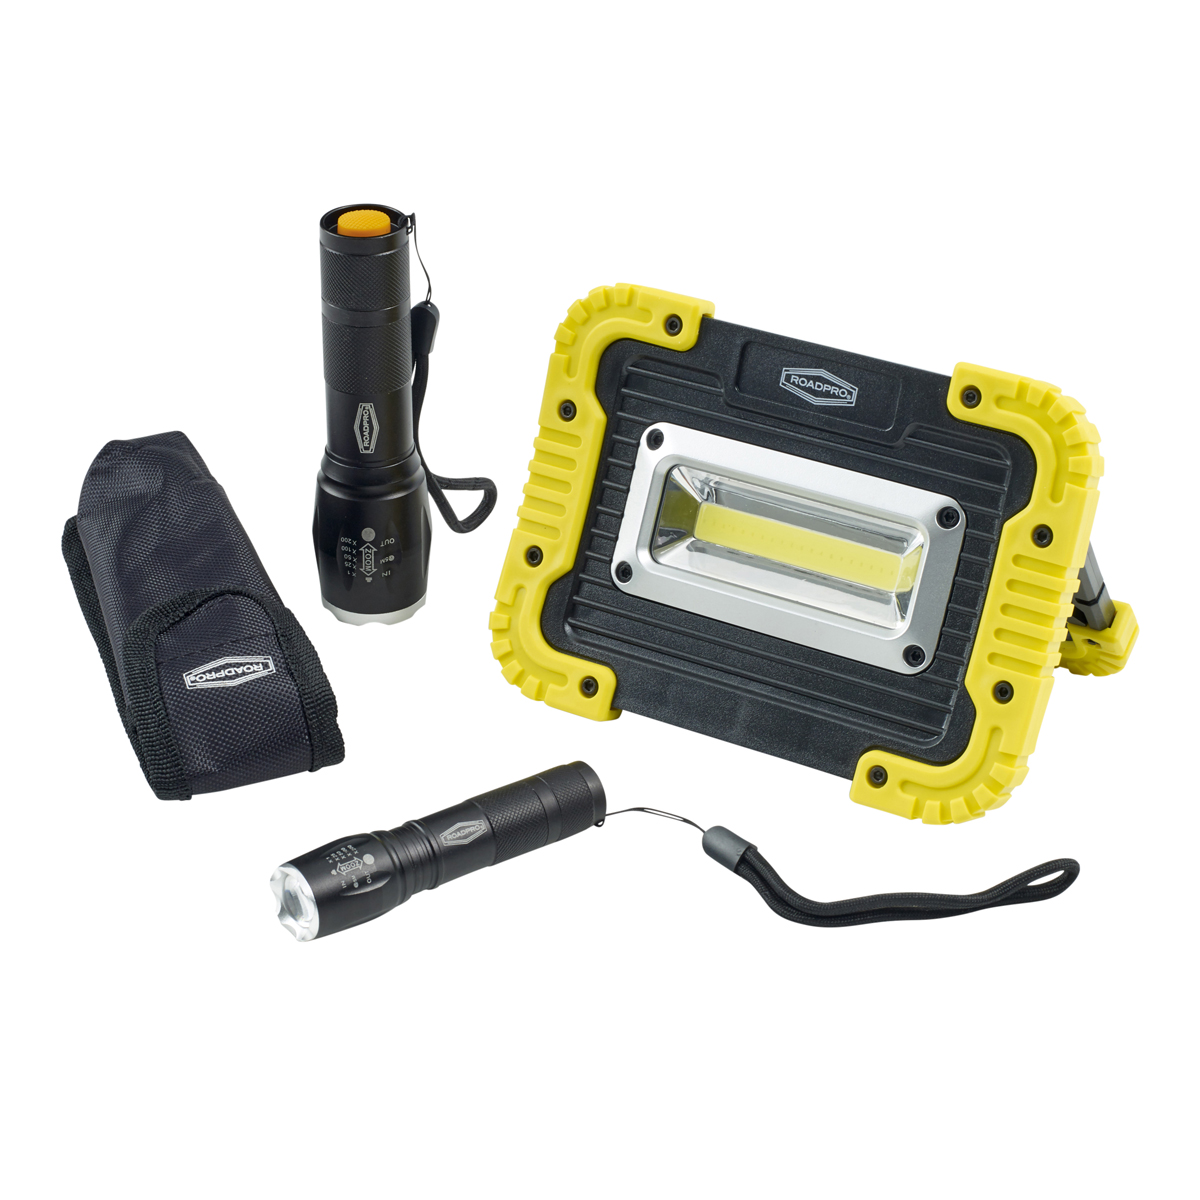 Flashlight Combo Kit With Work Light Portable Emergency Lighting Set RP1808C